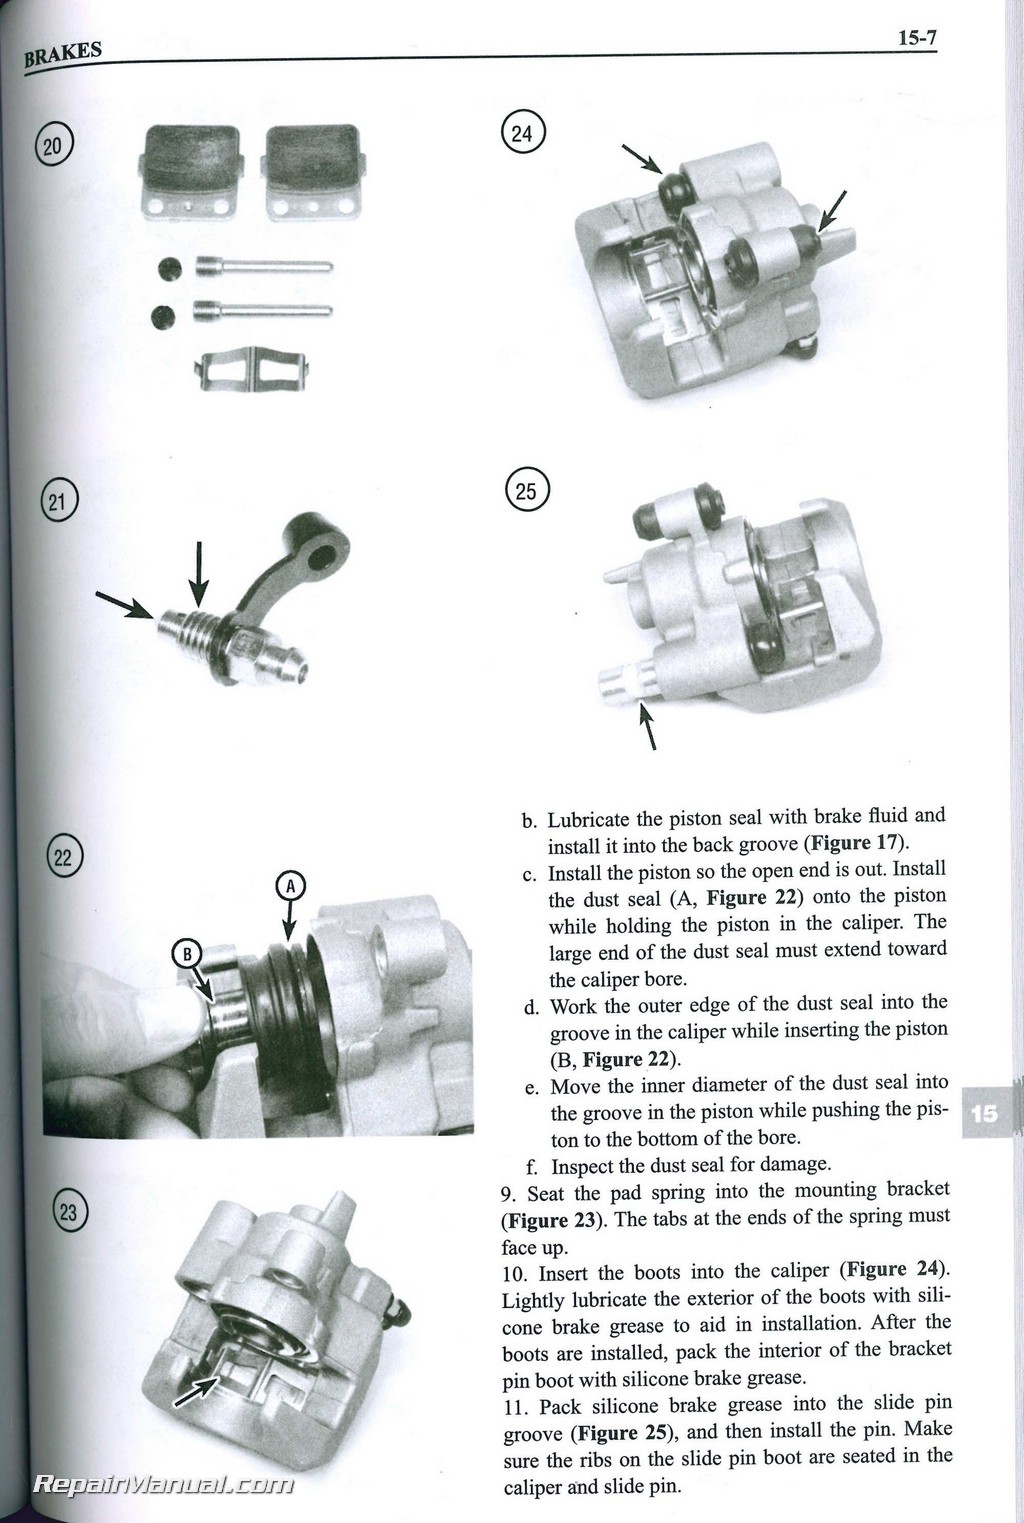 2002 Honda rancher service manual pdf #6